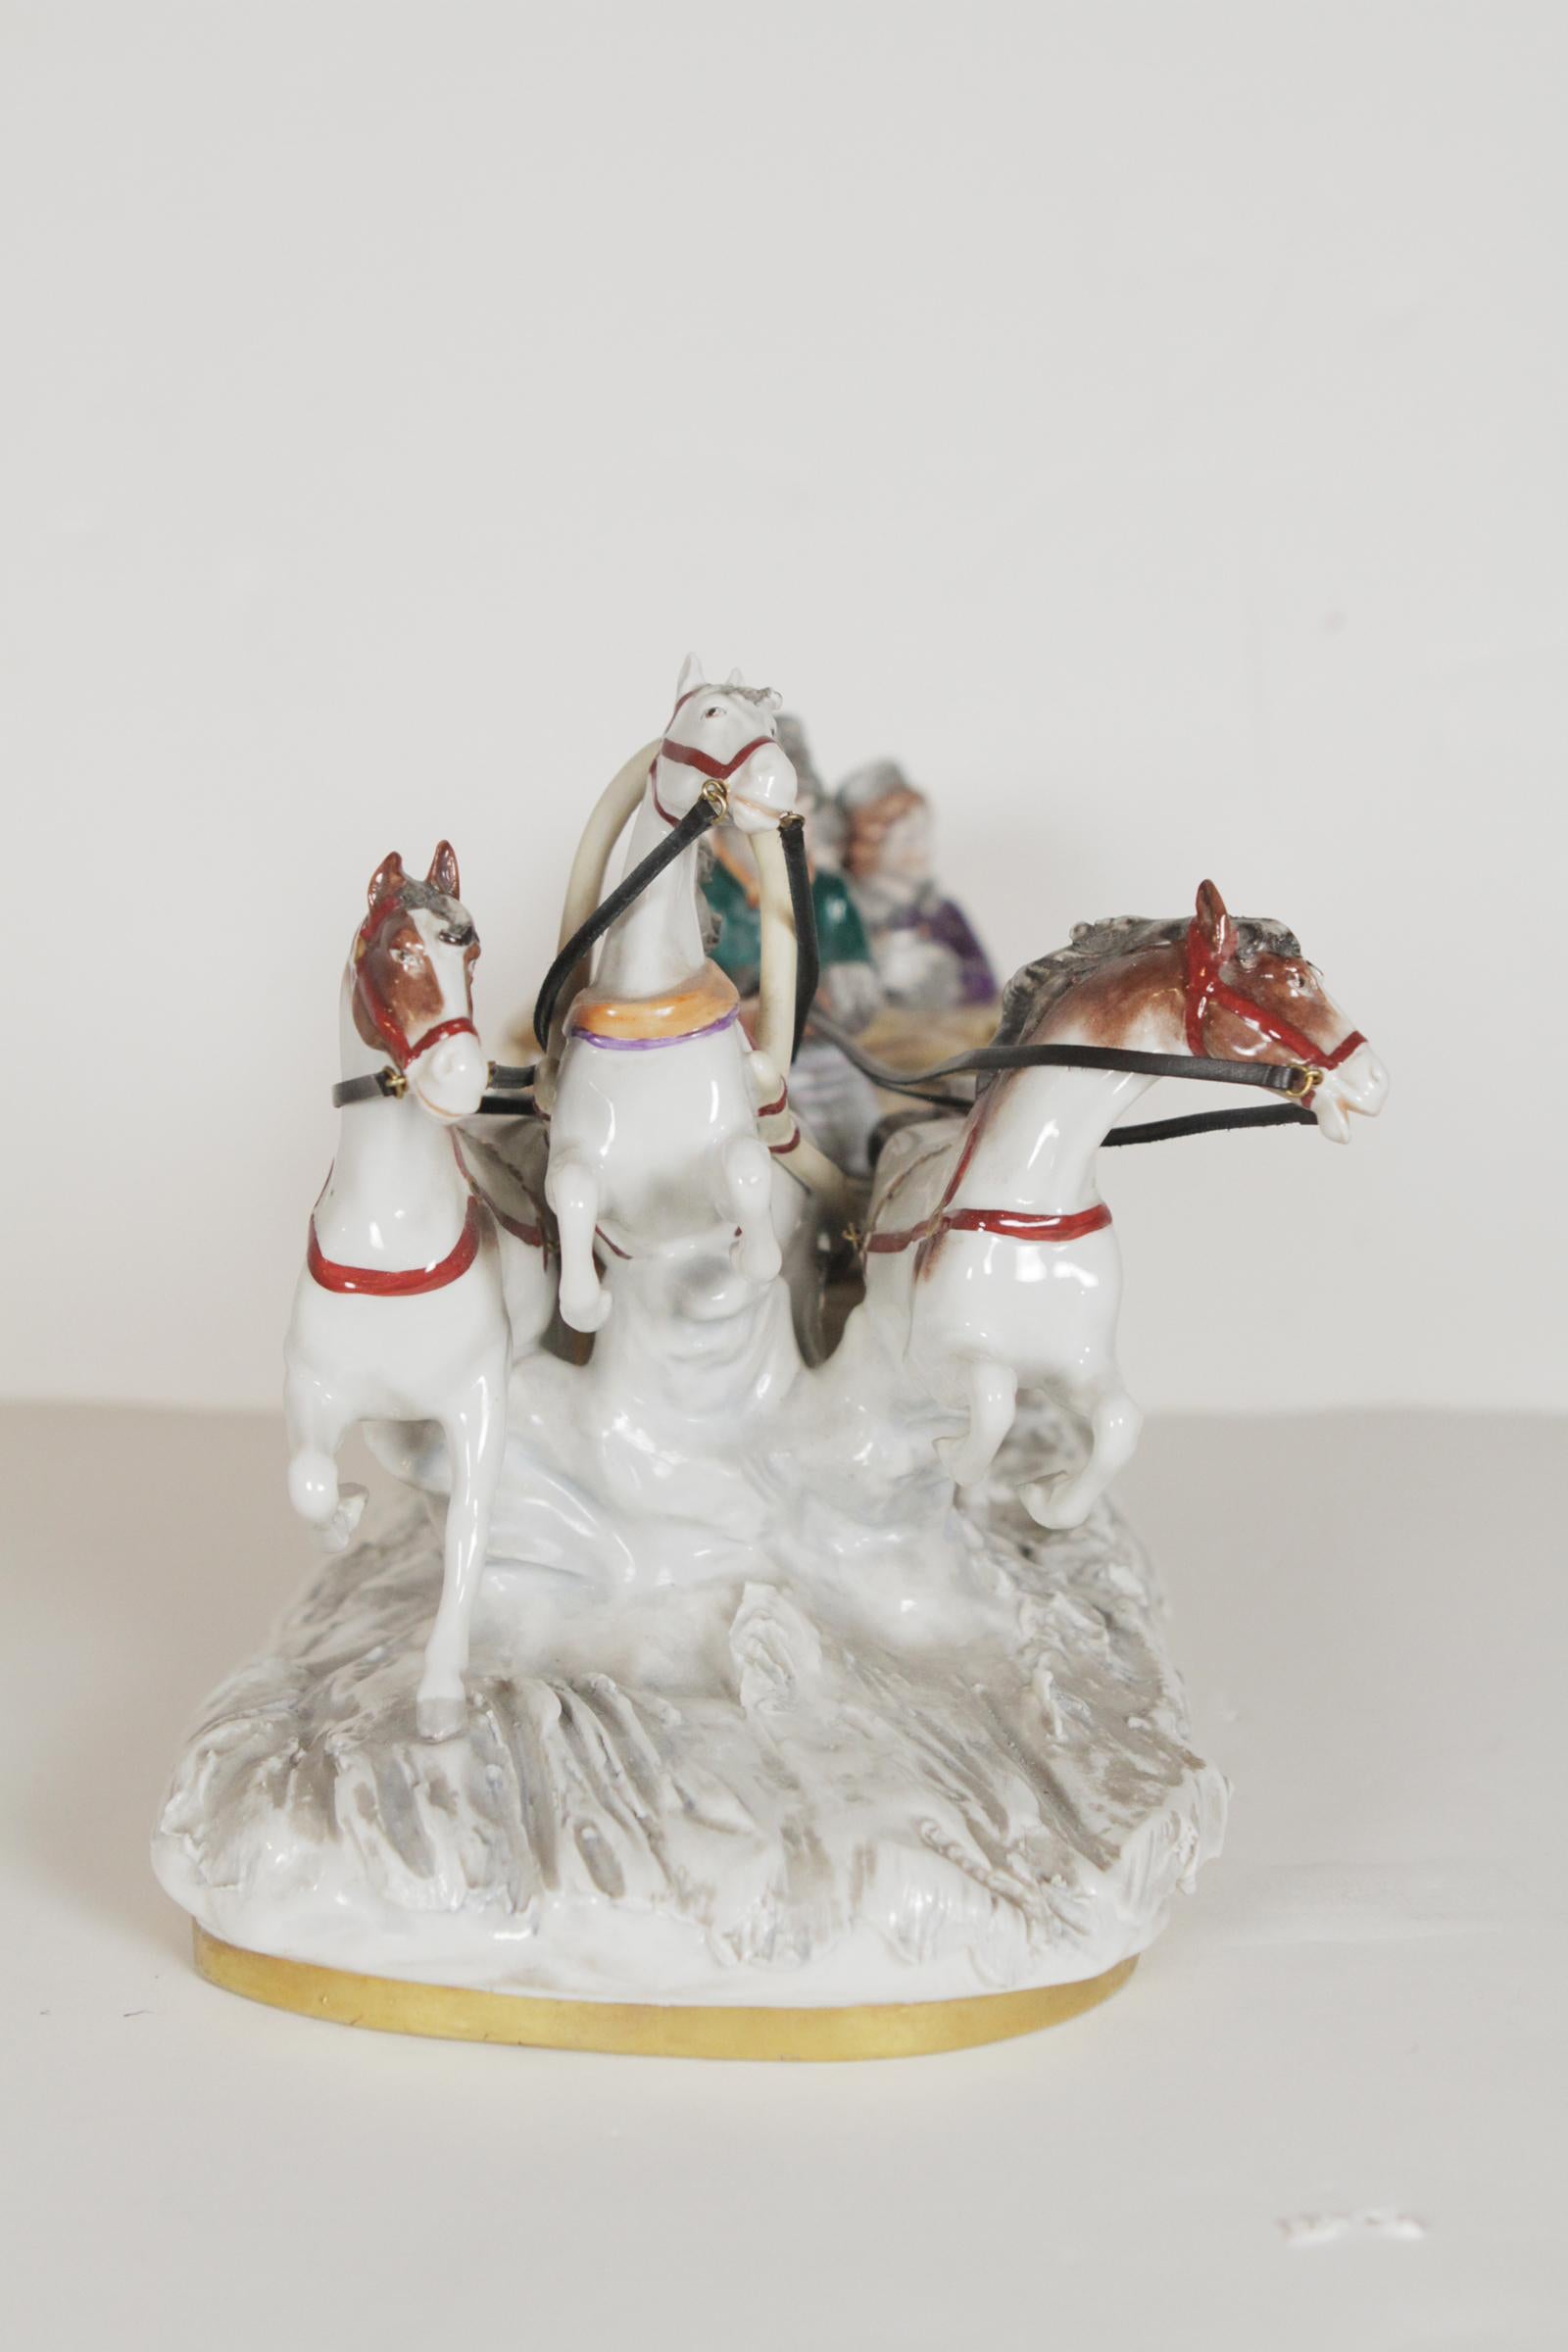 Scheibe-Ansbach Porcelain Figure. “St. Petersburg, Russia Sleigh Ride” 2